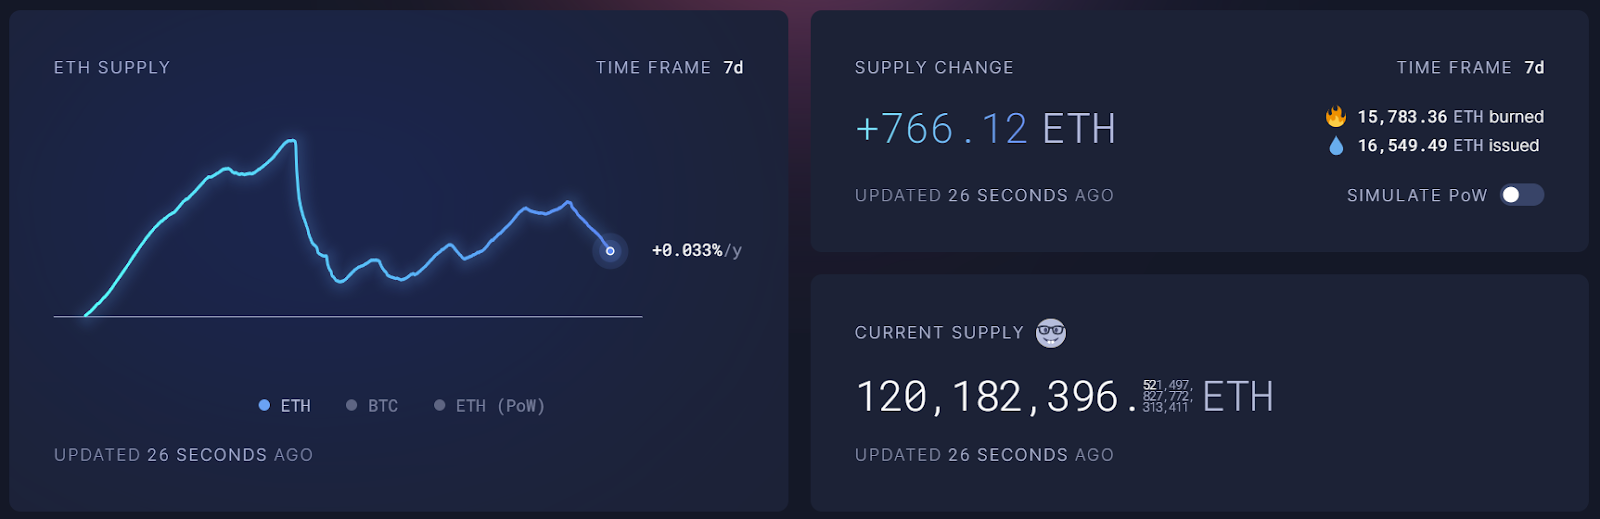 Ethereum supply over last 7 days 